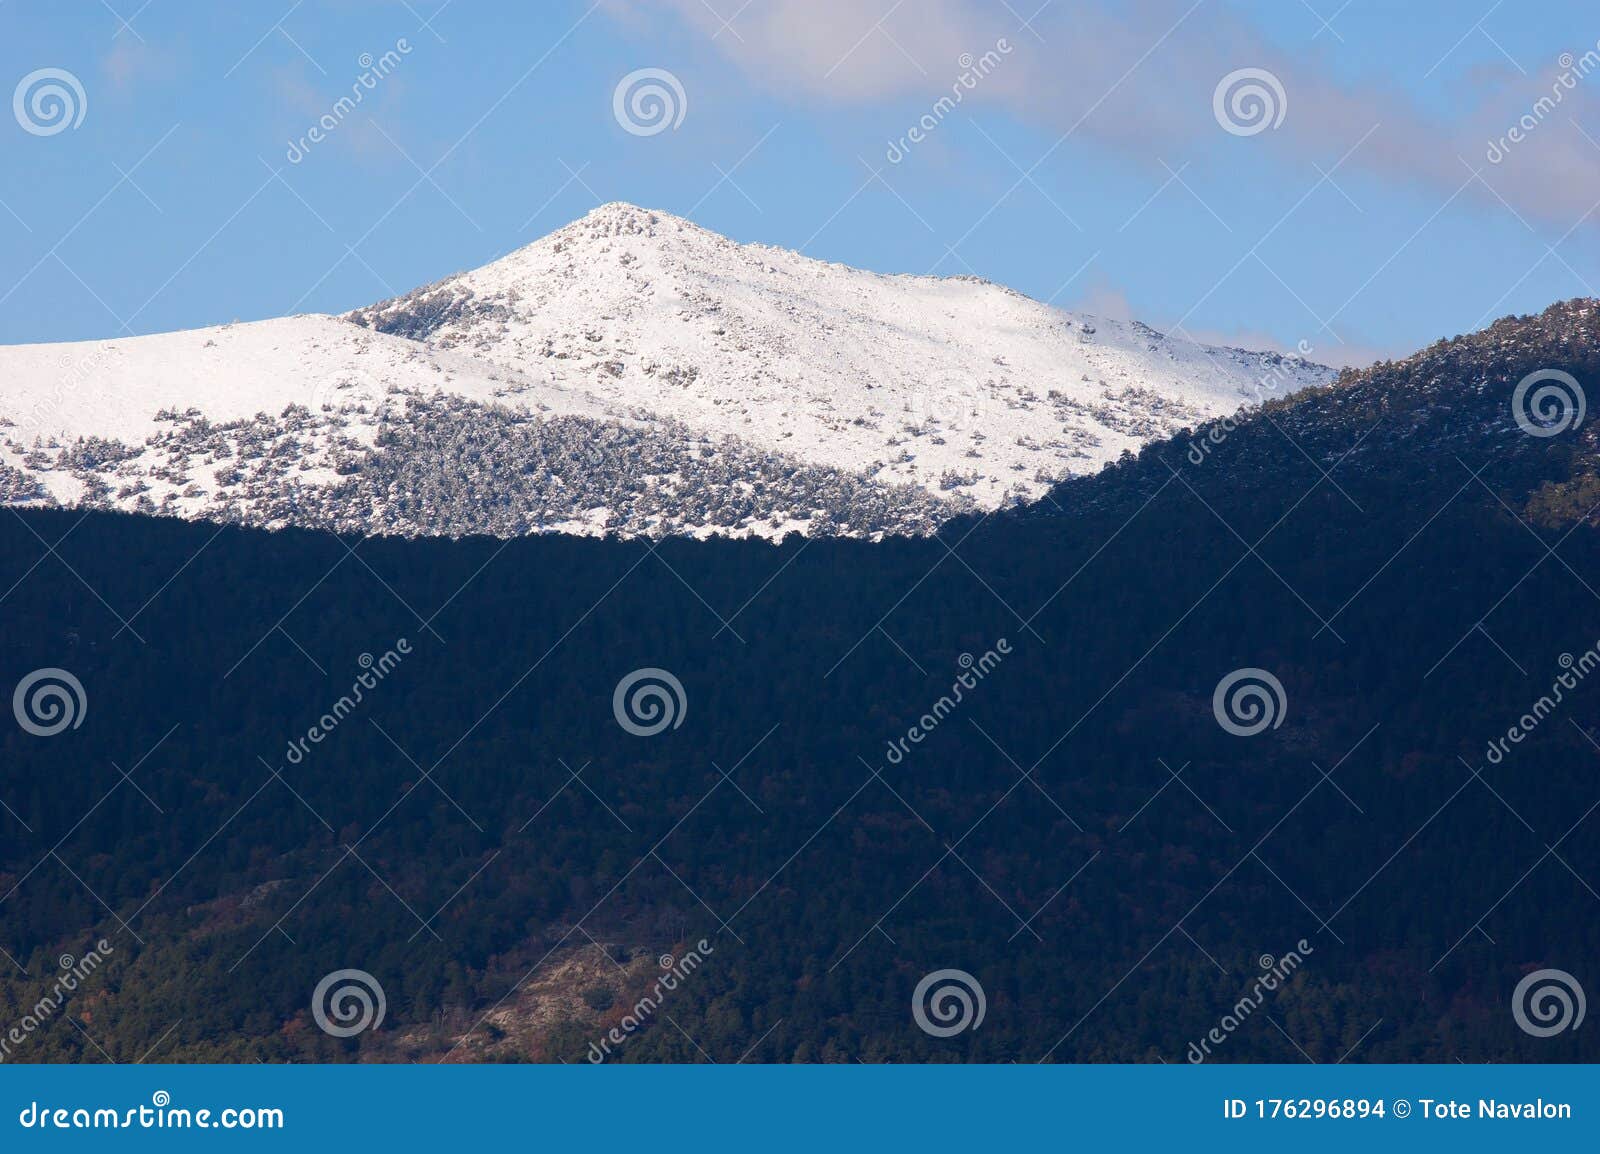 montoÃÂn de trigo snow-clad mountain in cercedilla, guadarrama national park